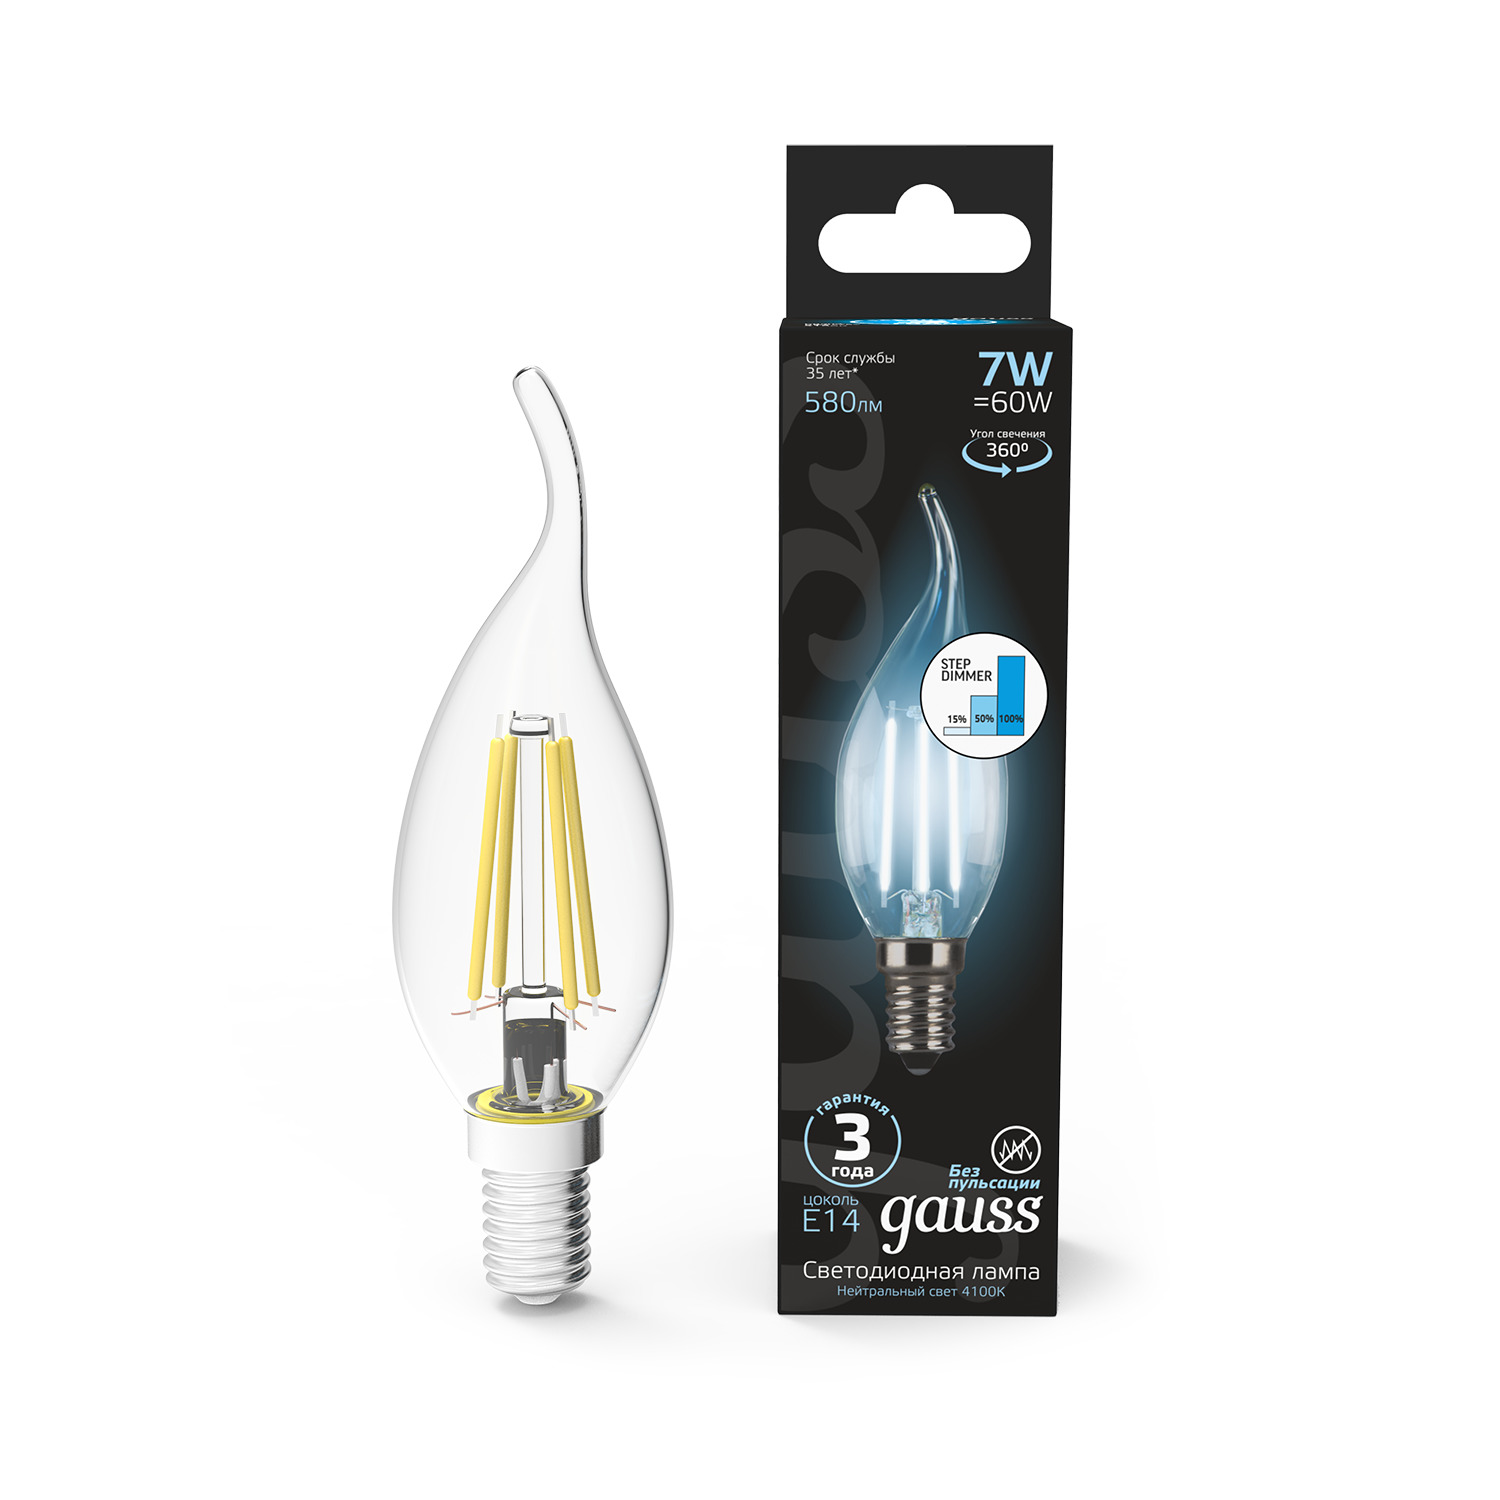 Лампа Gauss LED Filament Свеча на ветру E14 7W 580lm 4100K step dimmable 1/10/50 лампа gauss led filament свеча на ветру dimmable e14 5w 450lm 4100k 1 10 50